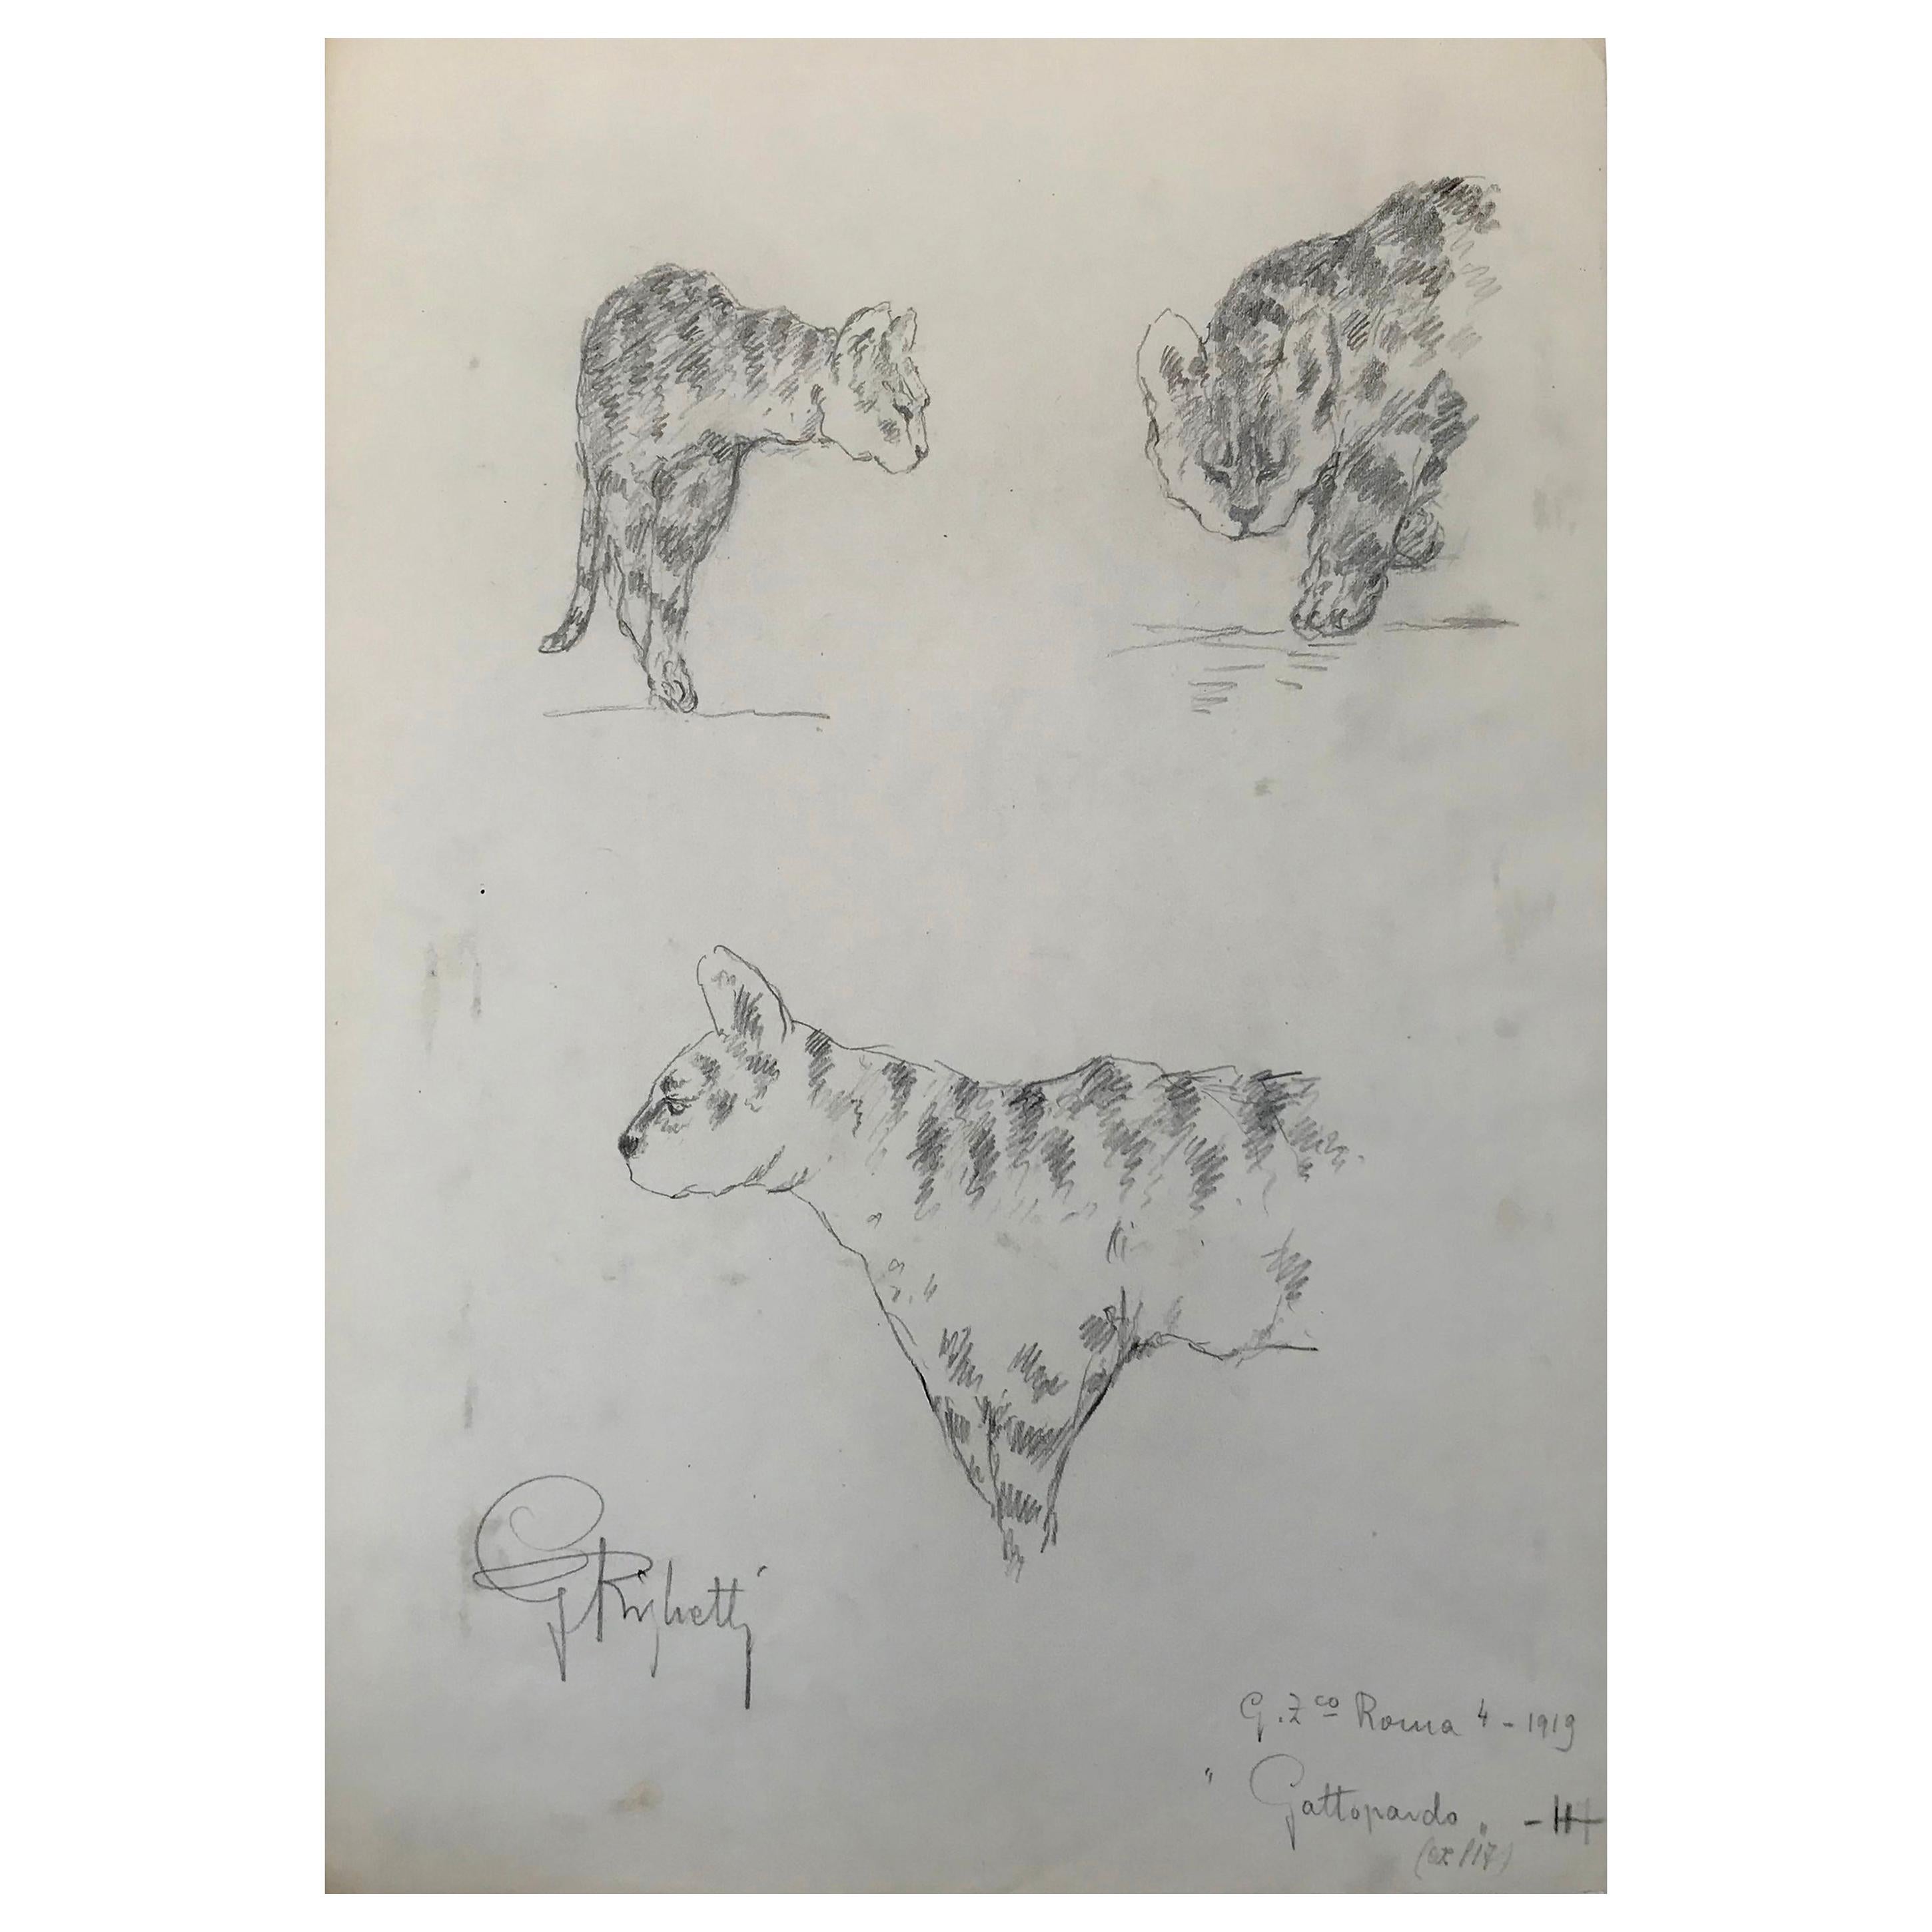 Ocelot Drawing, Guido Righetti, 1919